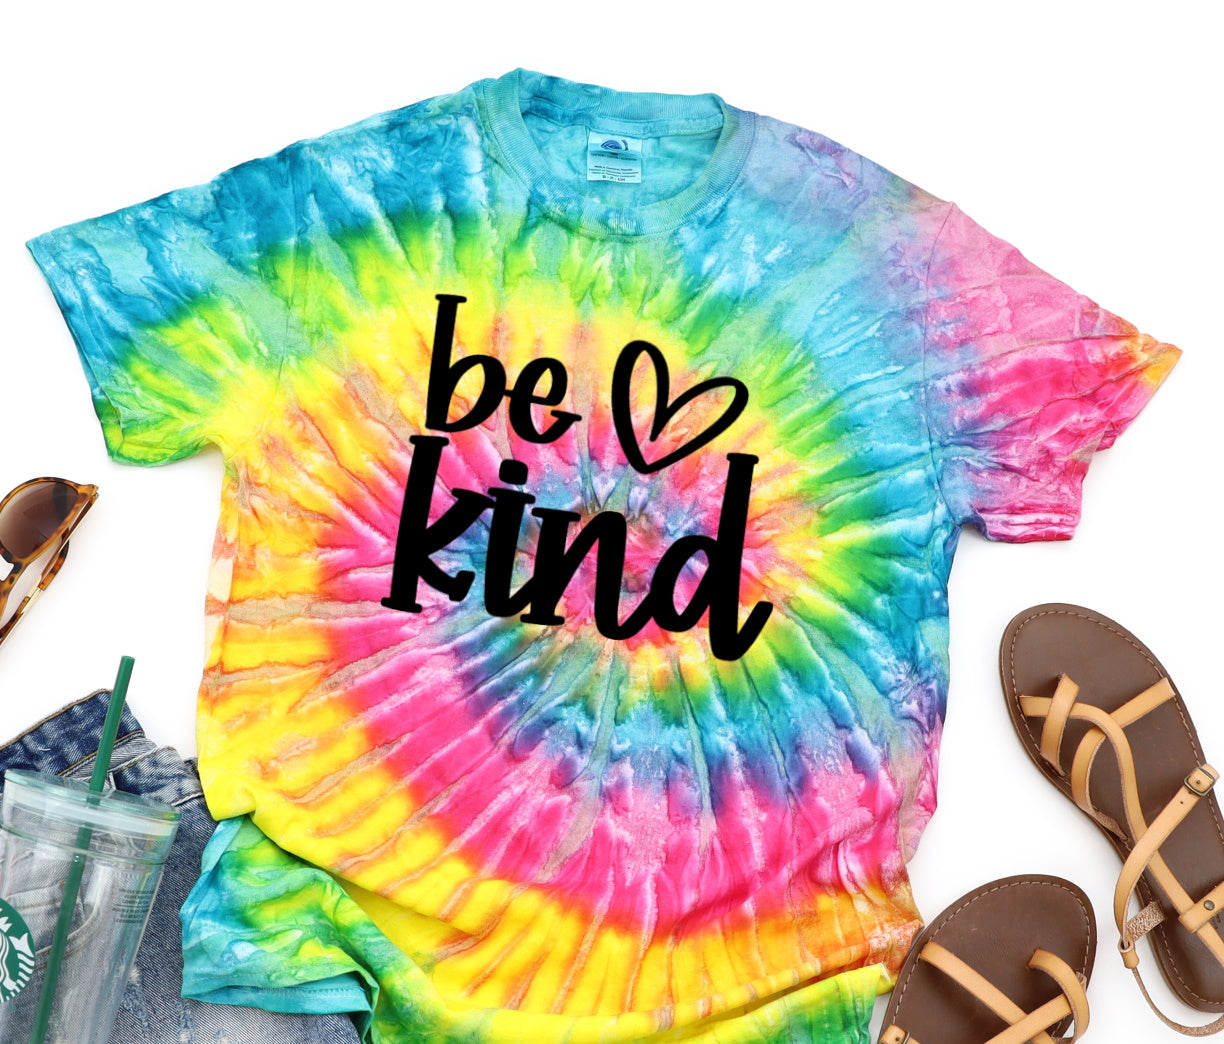 Be kind heart rainbow tie dye t-shirt